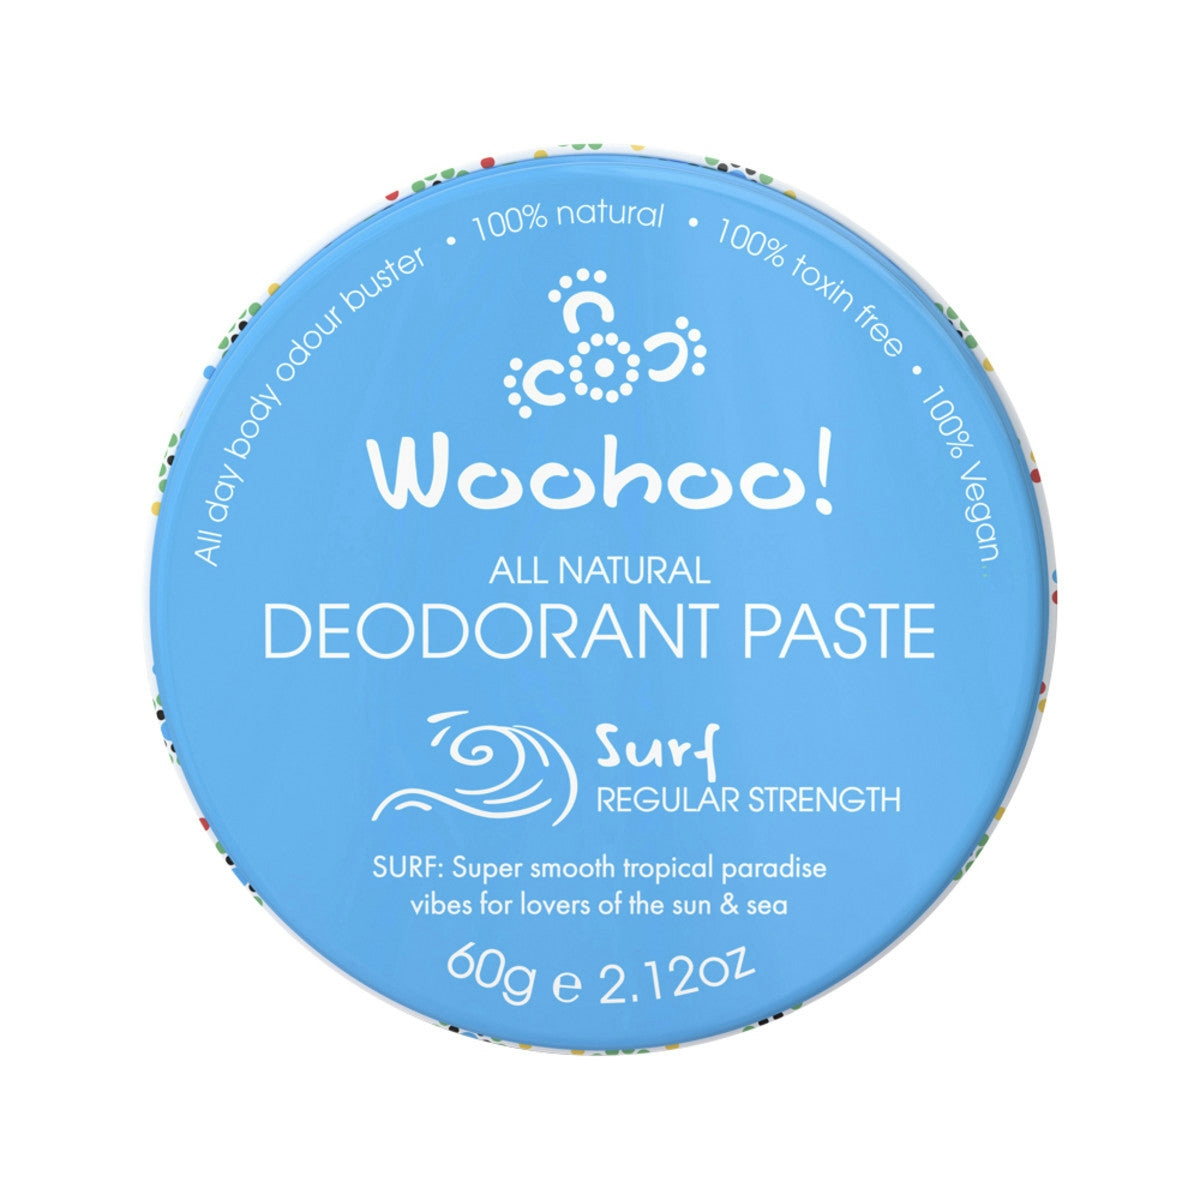 image of Woohoo Deodorant Paste Surf (Regular Strength)Tin 60g on white background